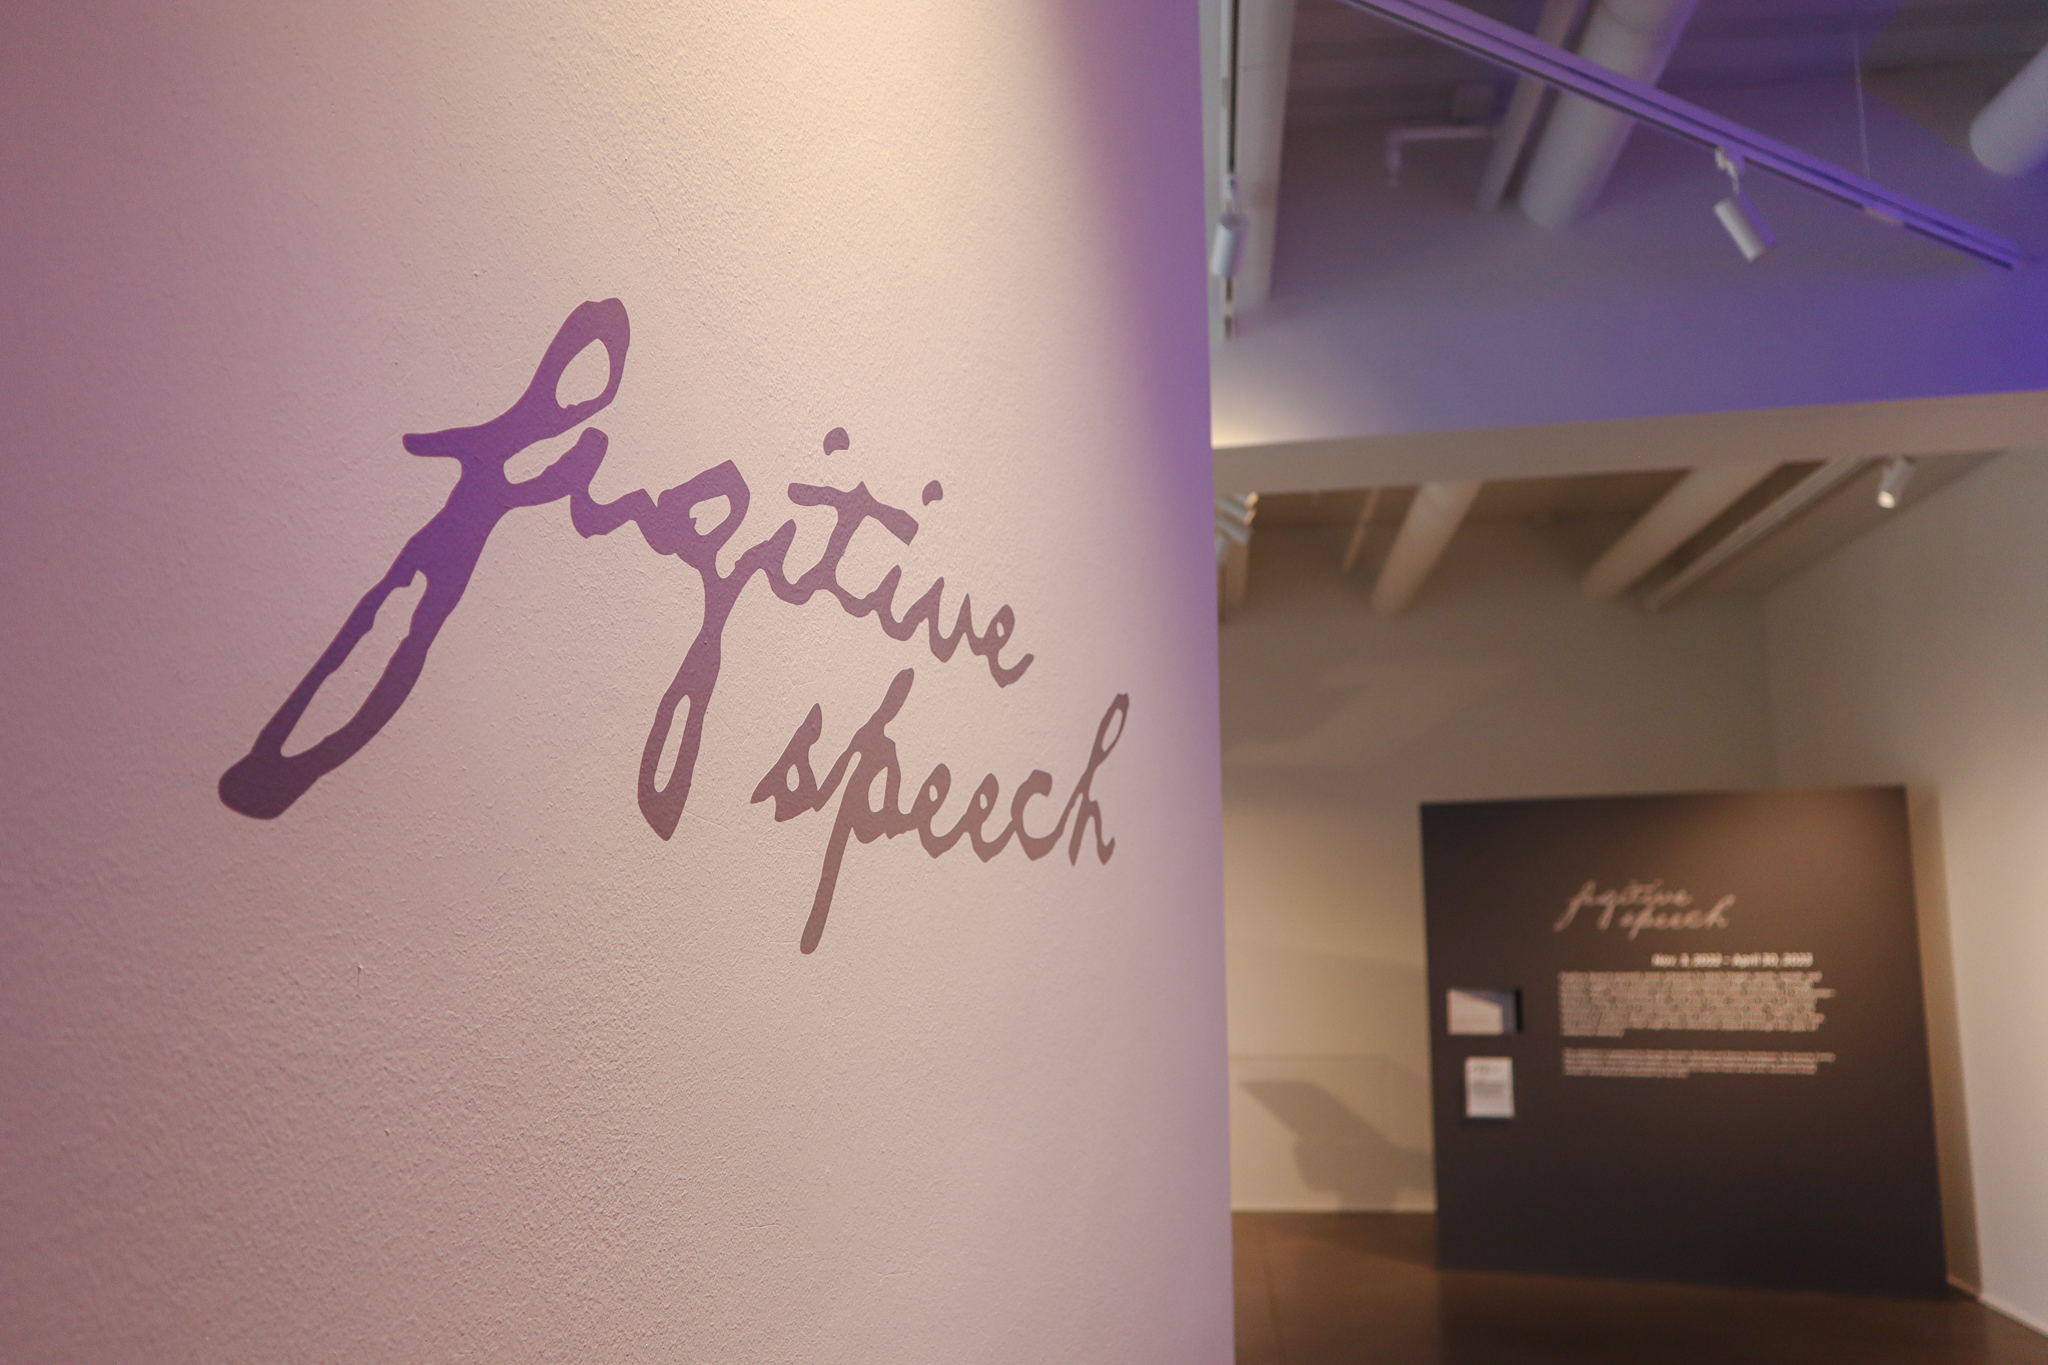 Written in lowercase cursive is 'fugitive speech' in gray on a white wall.